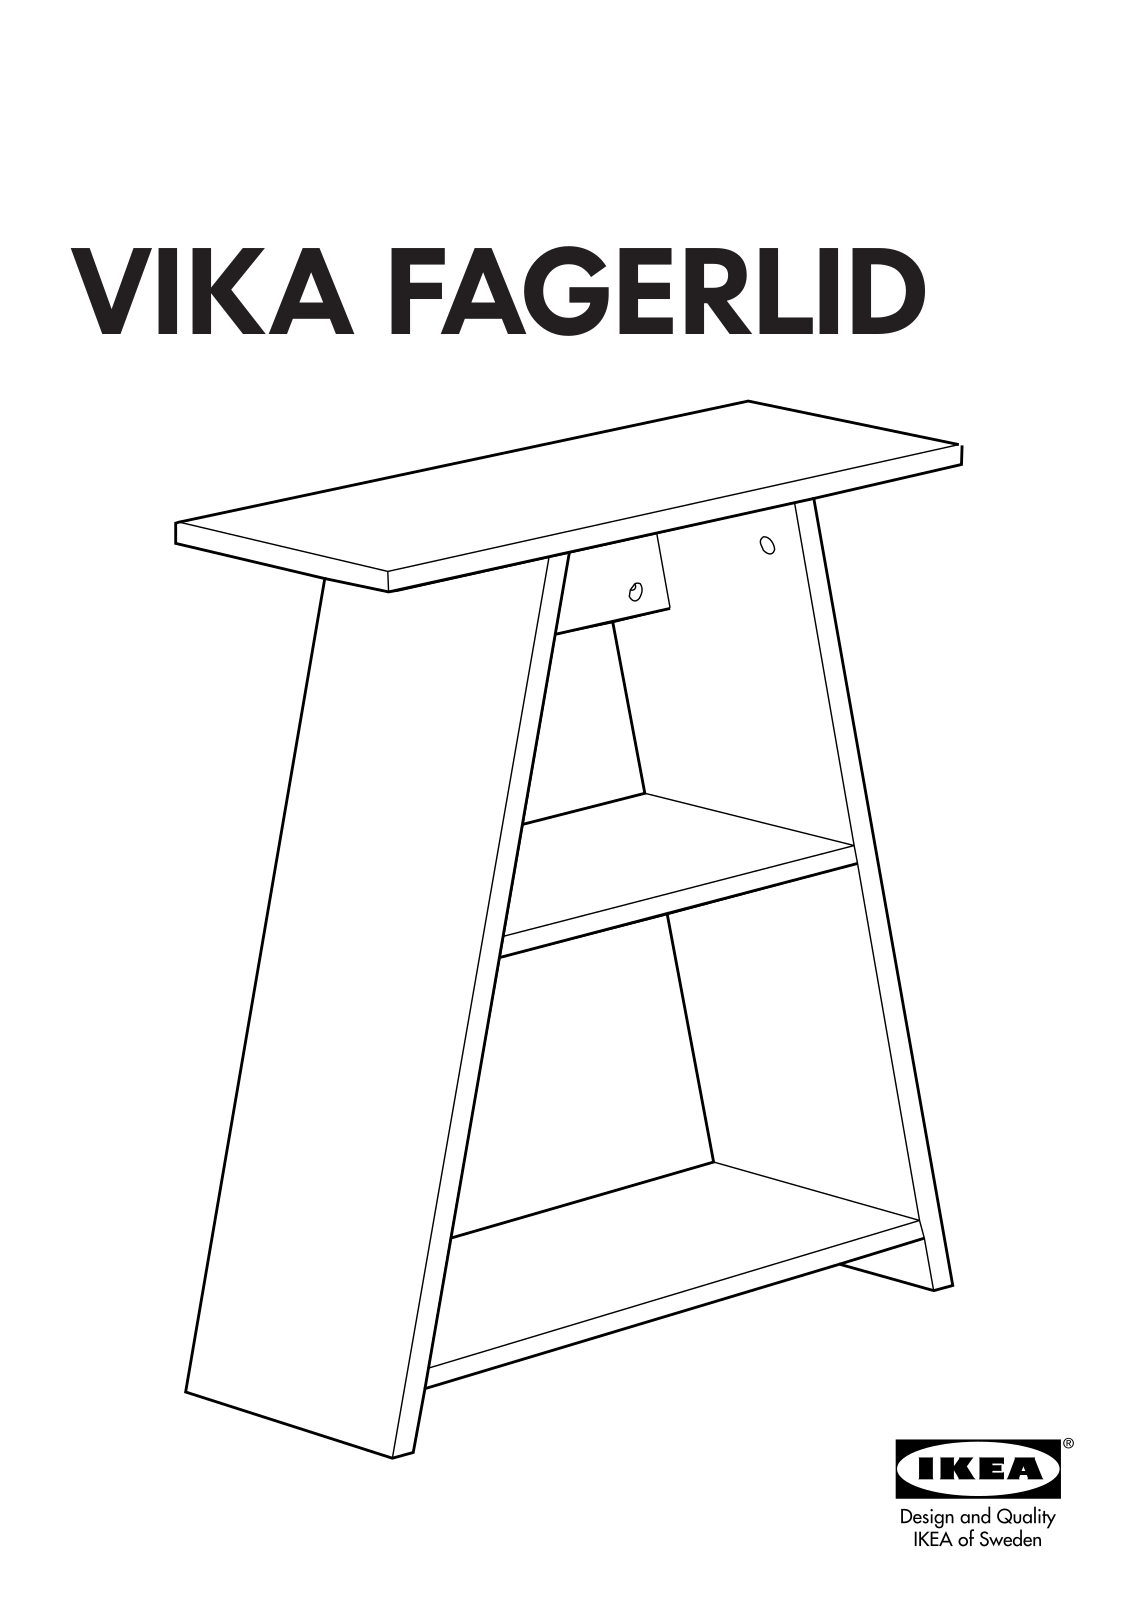 IKEA VIKA FAGERLID TABLE LEG W STORAGE 28X26 Assembly Instruction